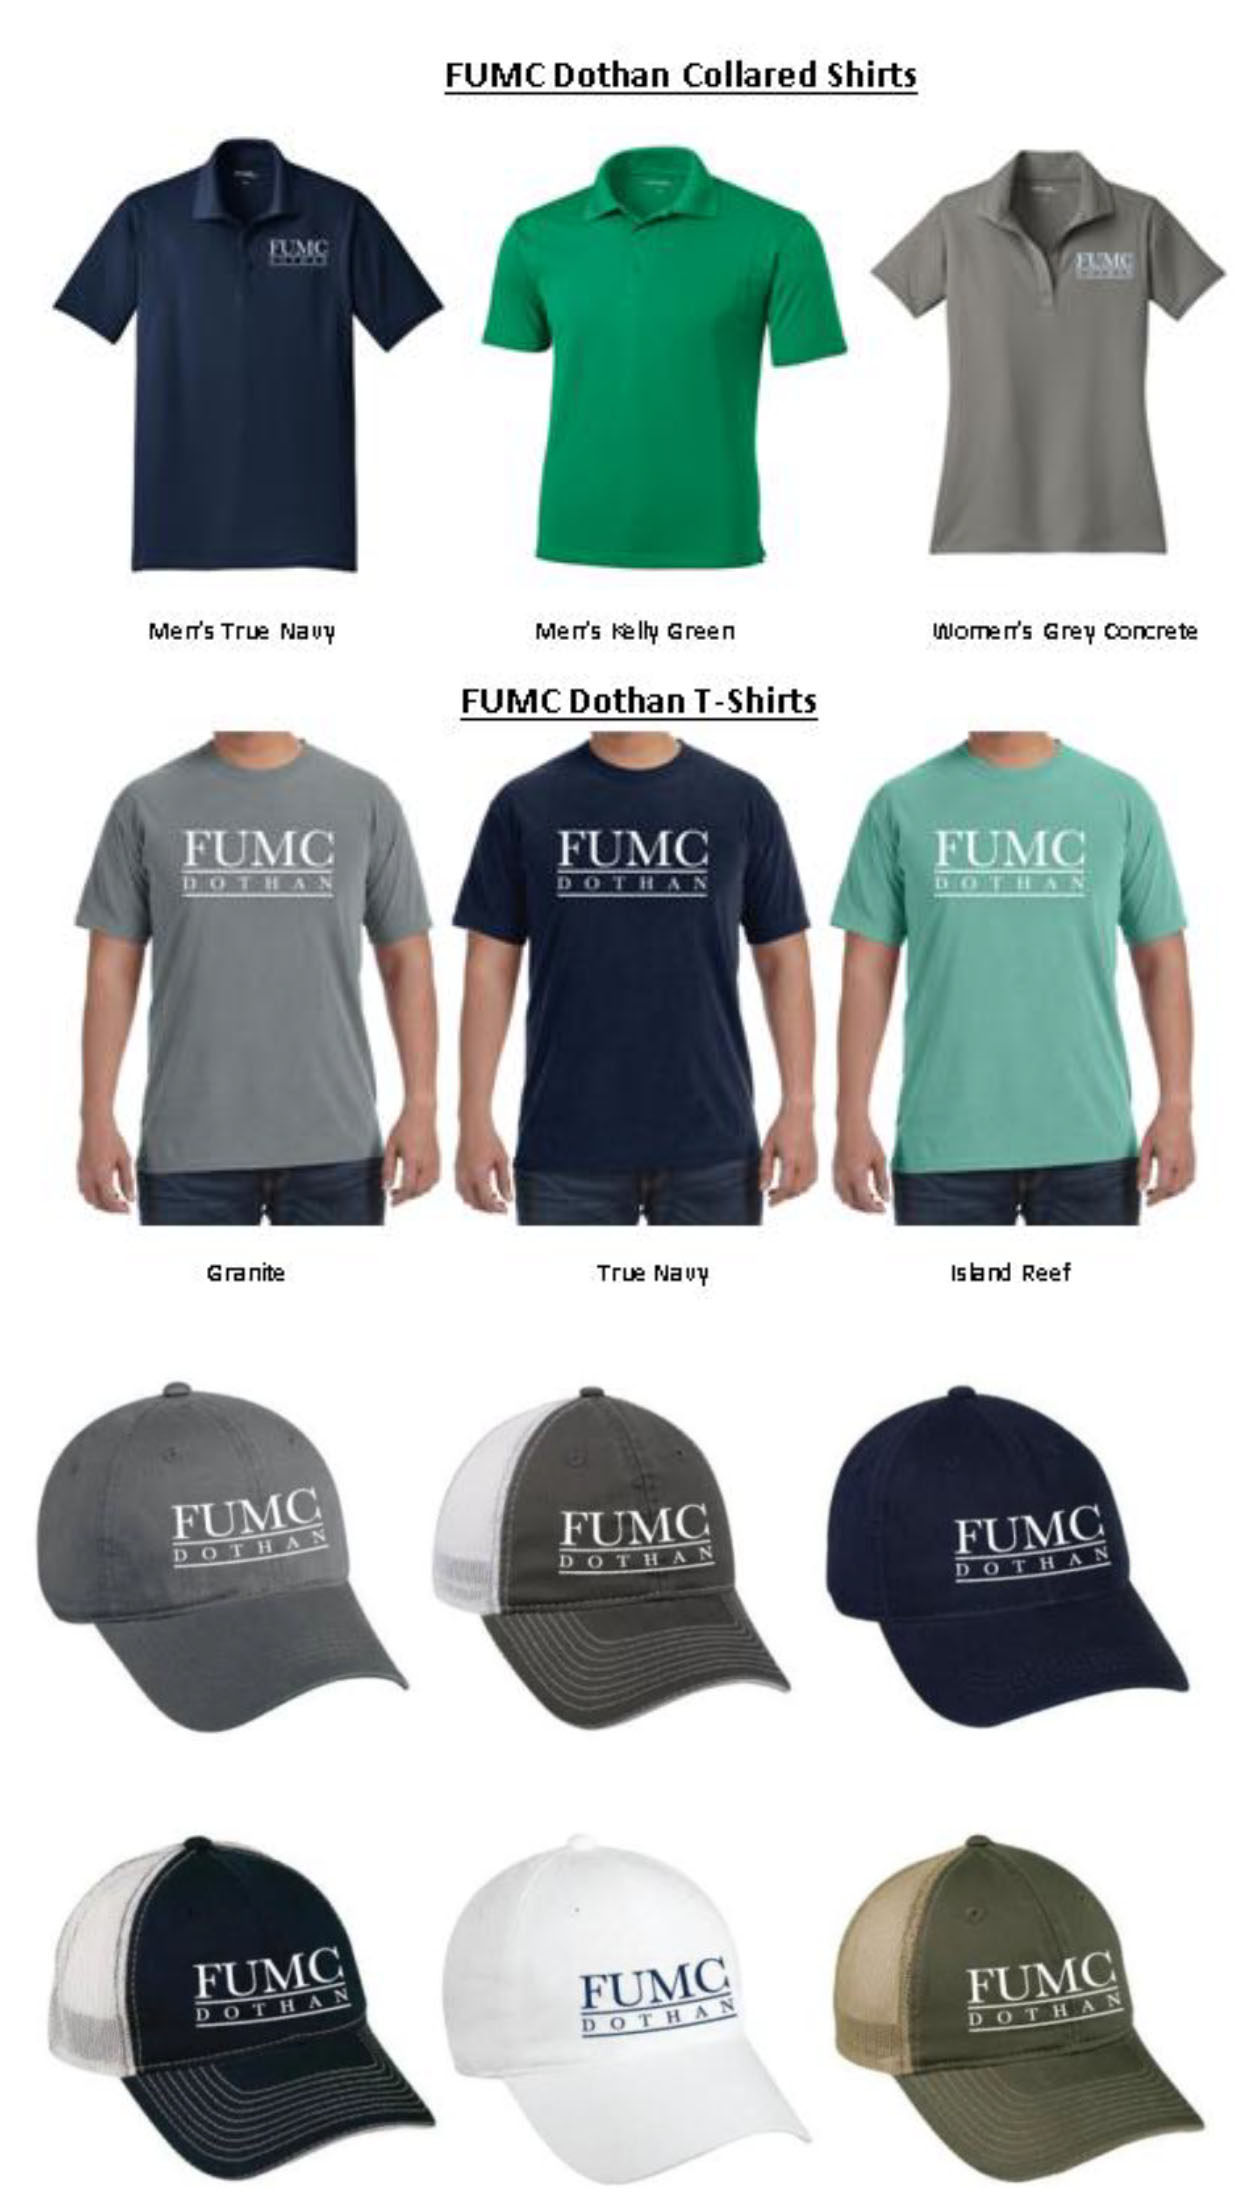 FUMC Hats, T-Shirts, & Collared Shirts